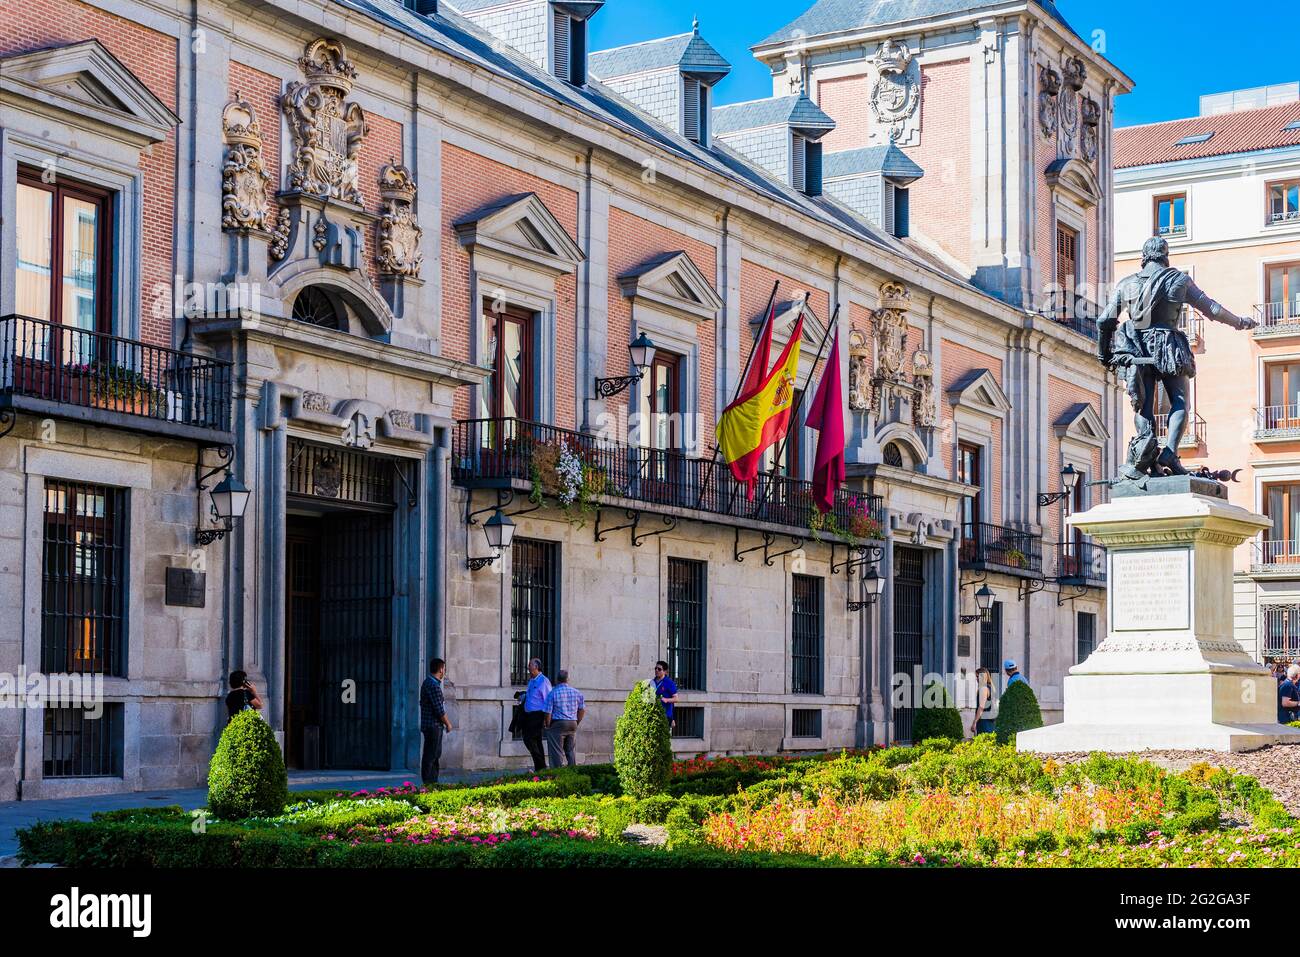 The old city hall, the Casa de la Villa de Madrid. The Casa de la Villa is a building located in Madrid, Spain. It served as city hall from the 17th t Stock Photo